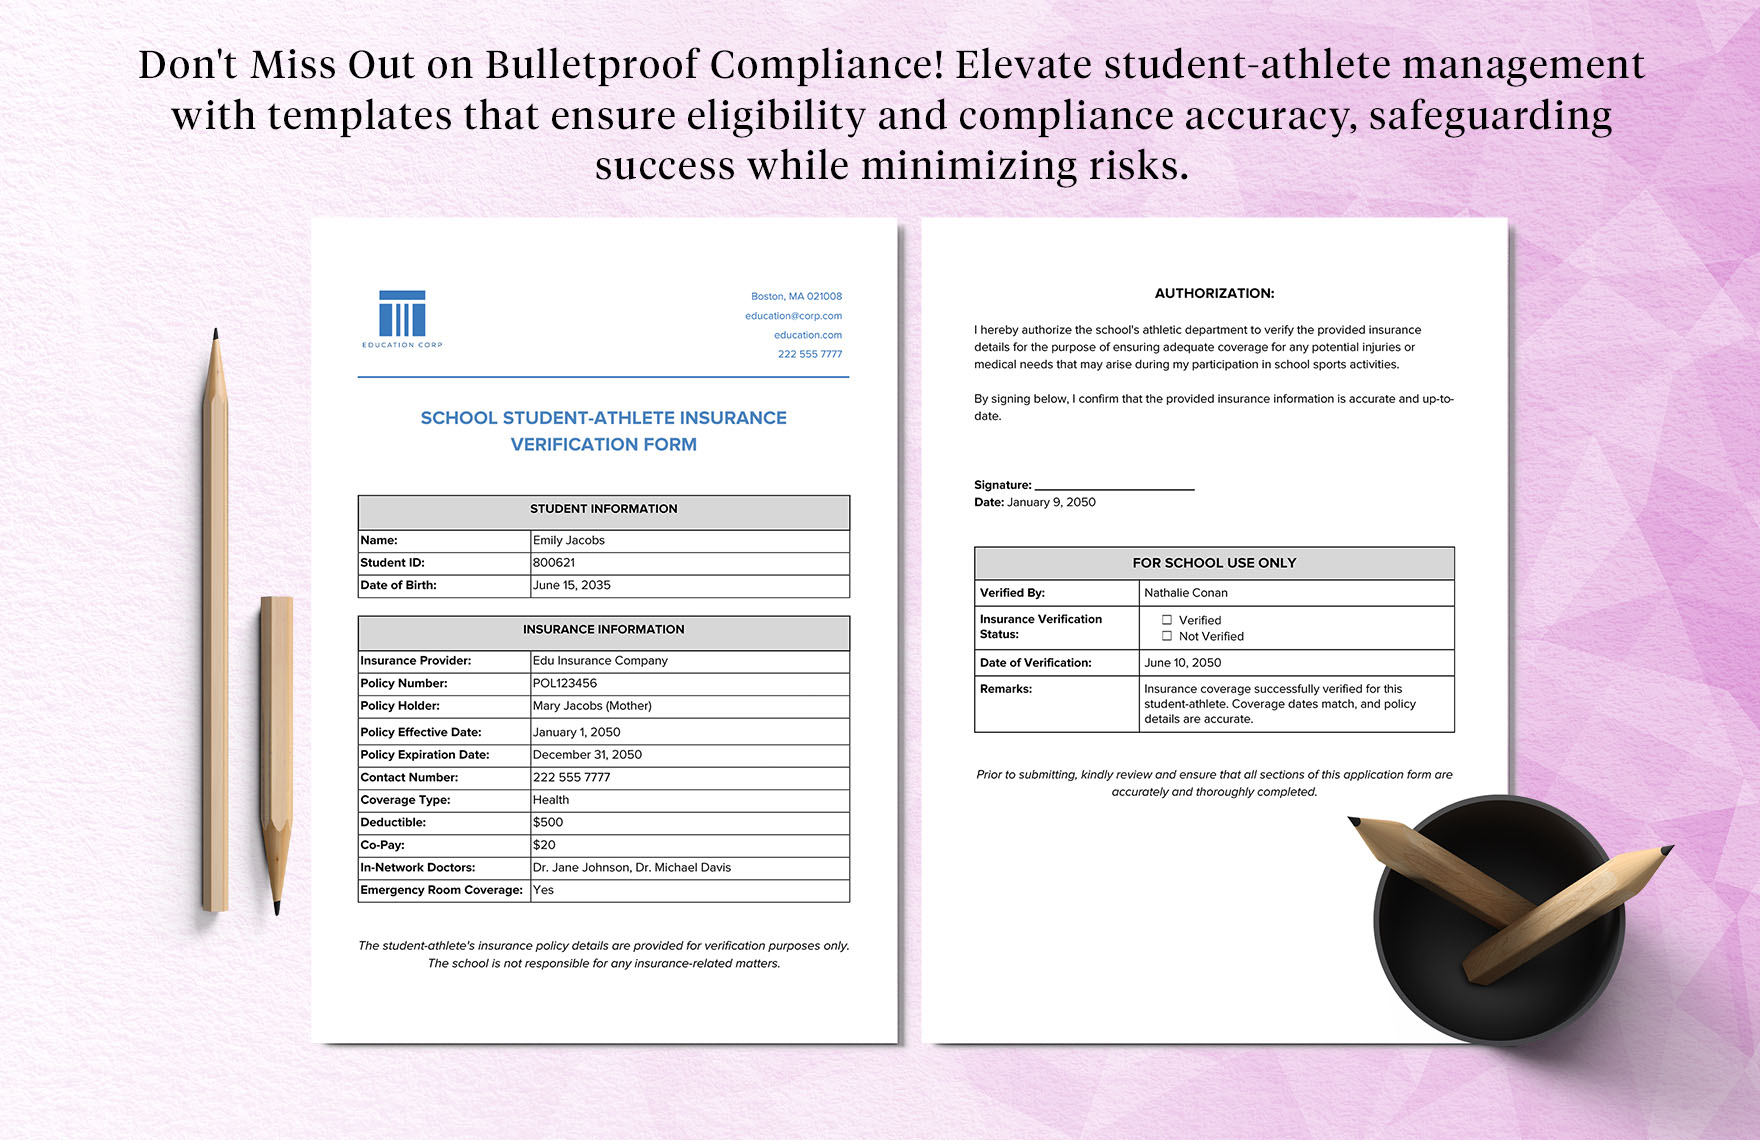 School Student-Athlete Insurance Verification Form Template